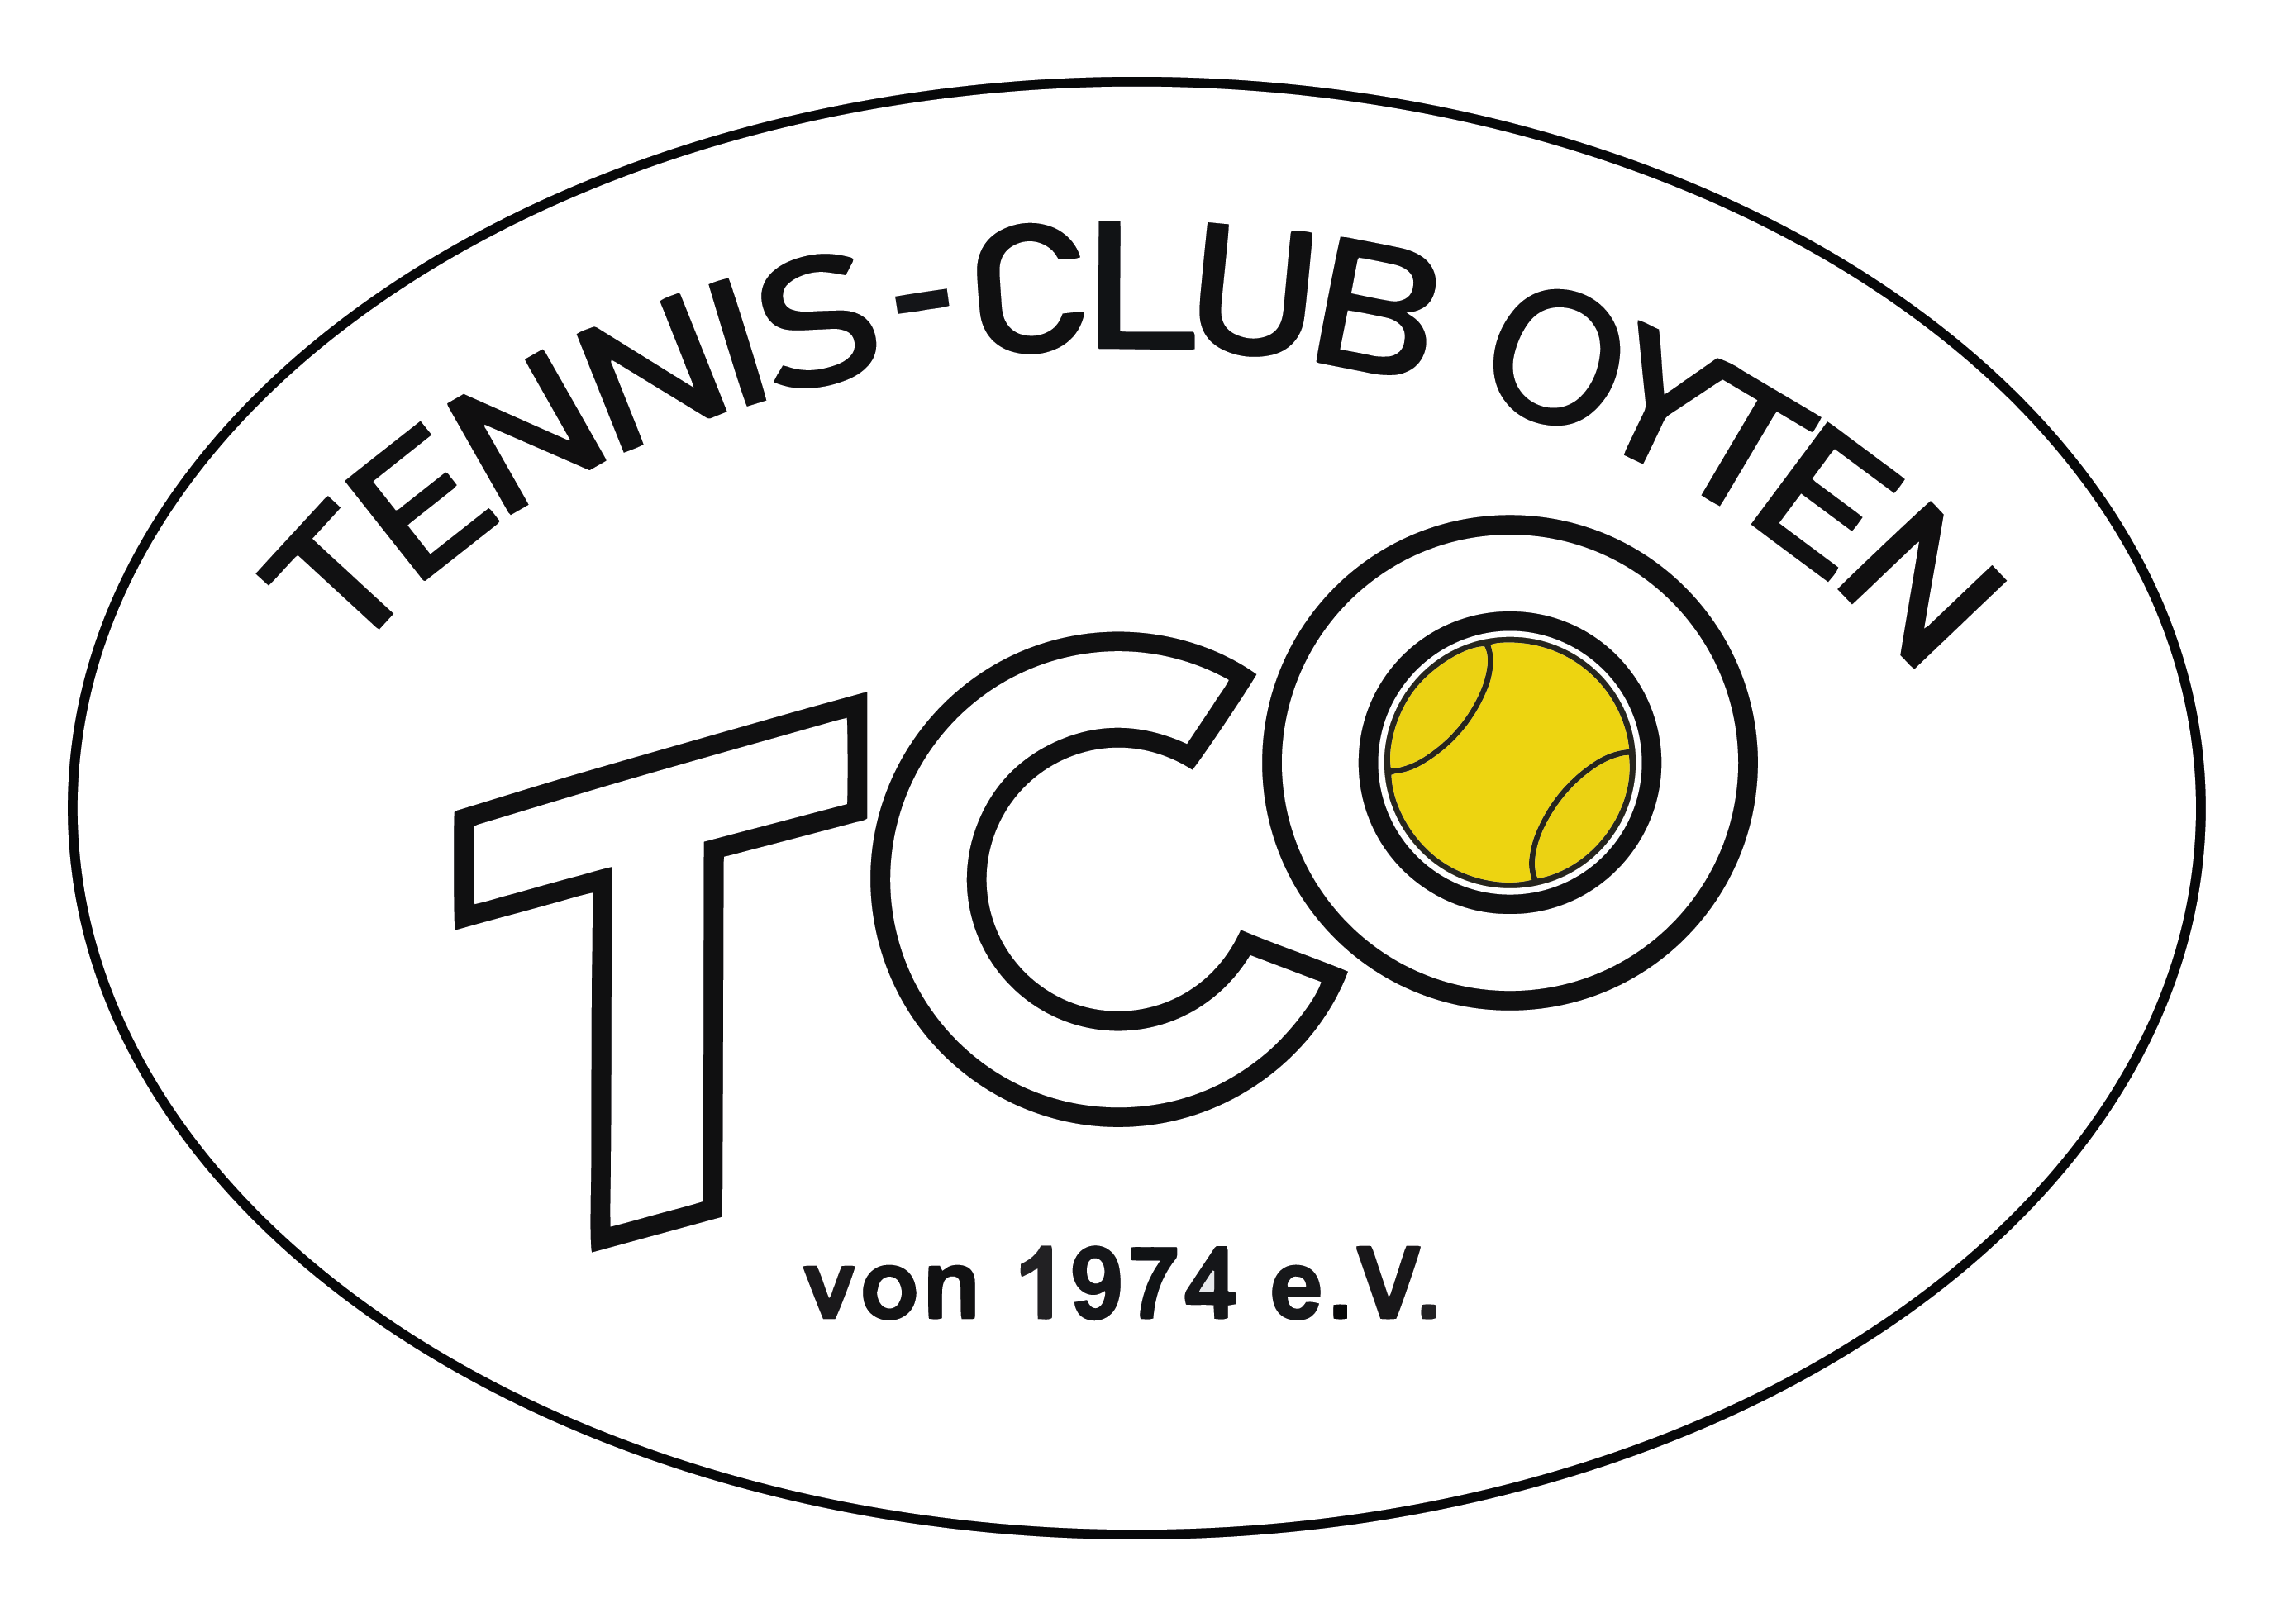 Tennis-Club Oyten von 1974 e.V.